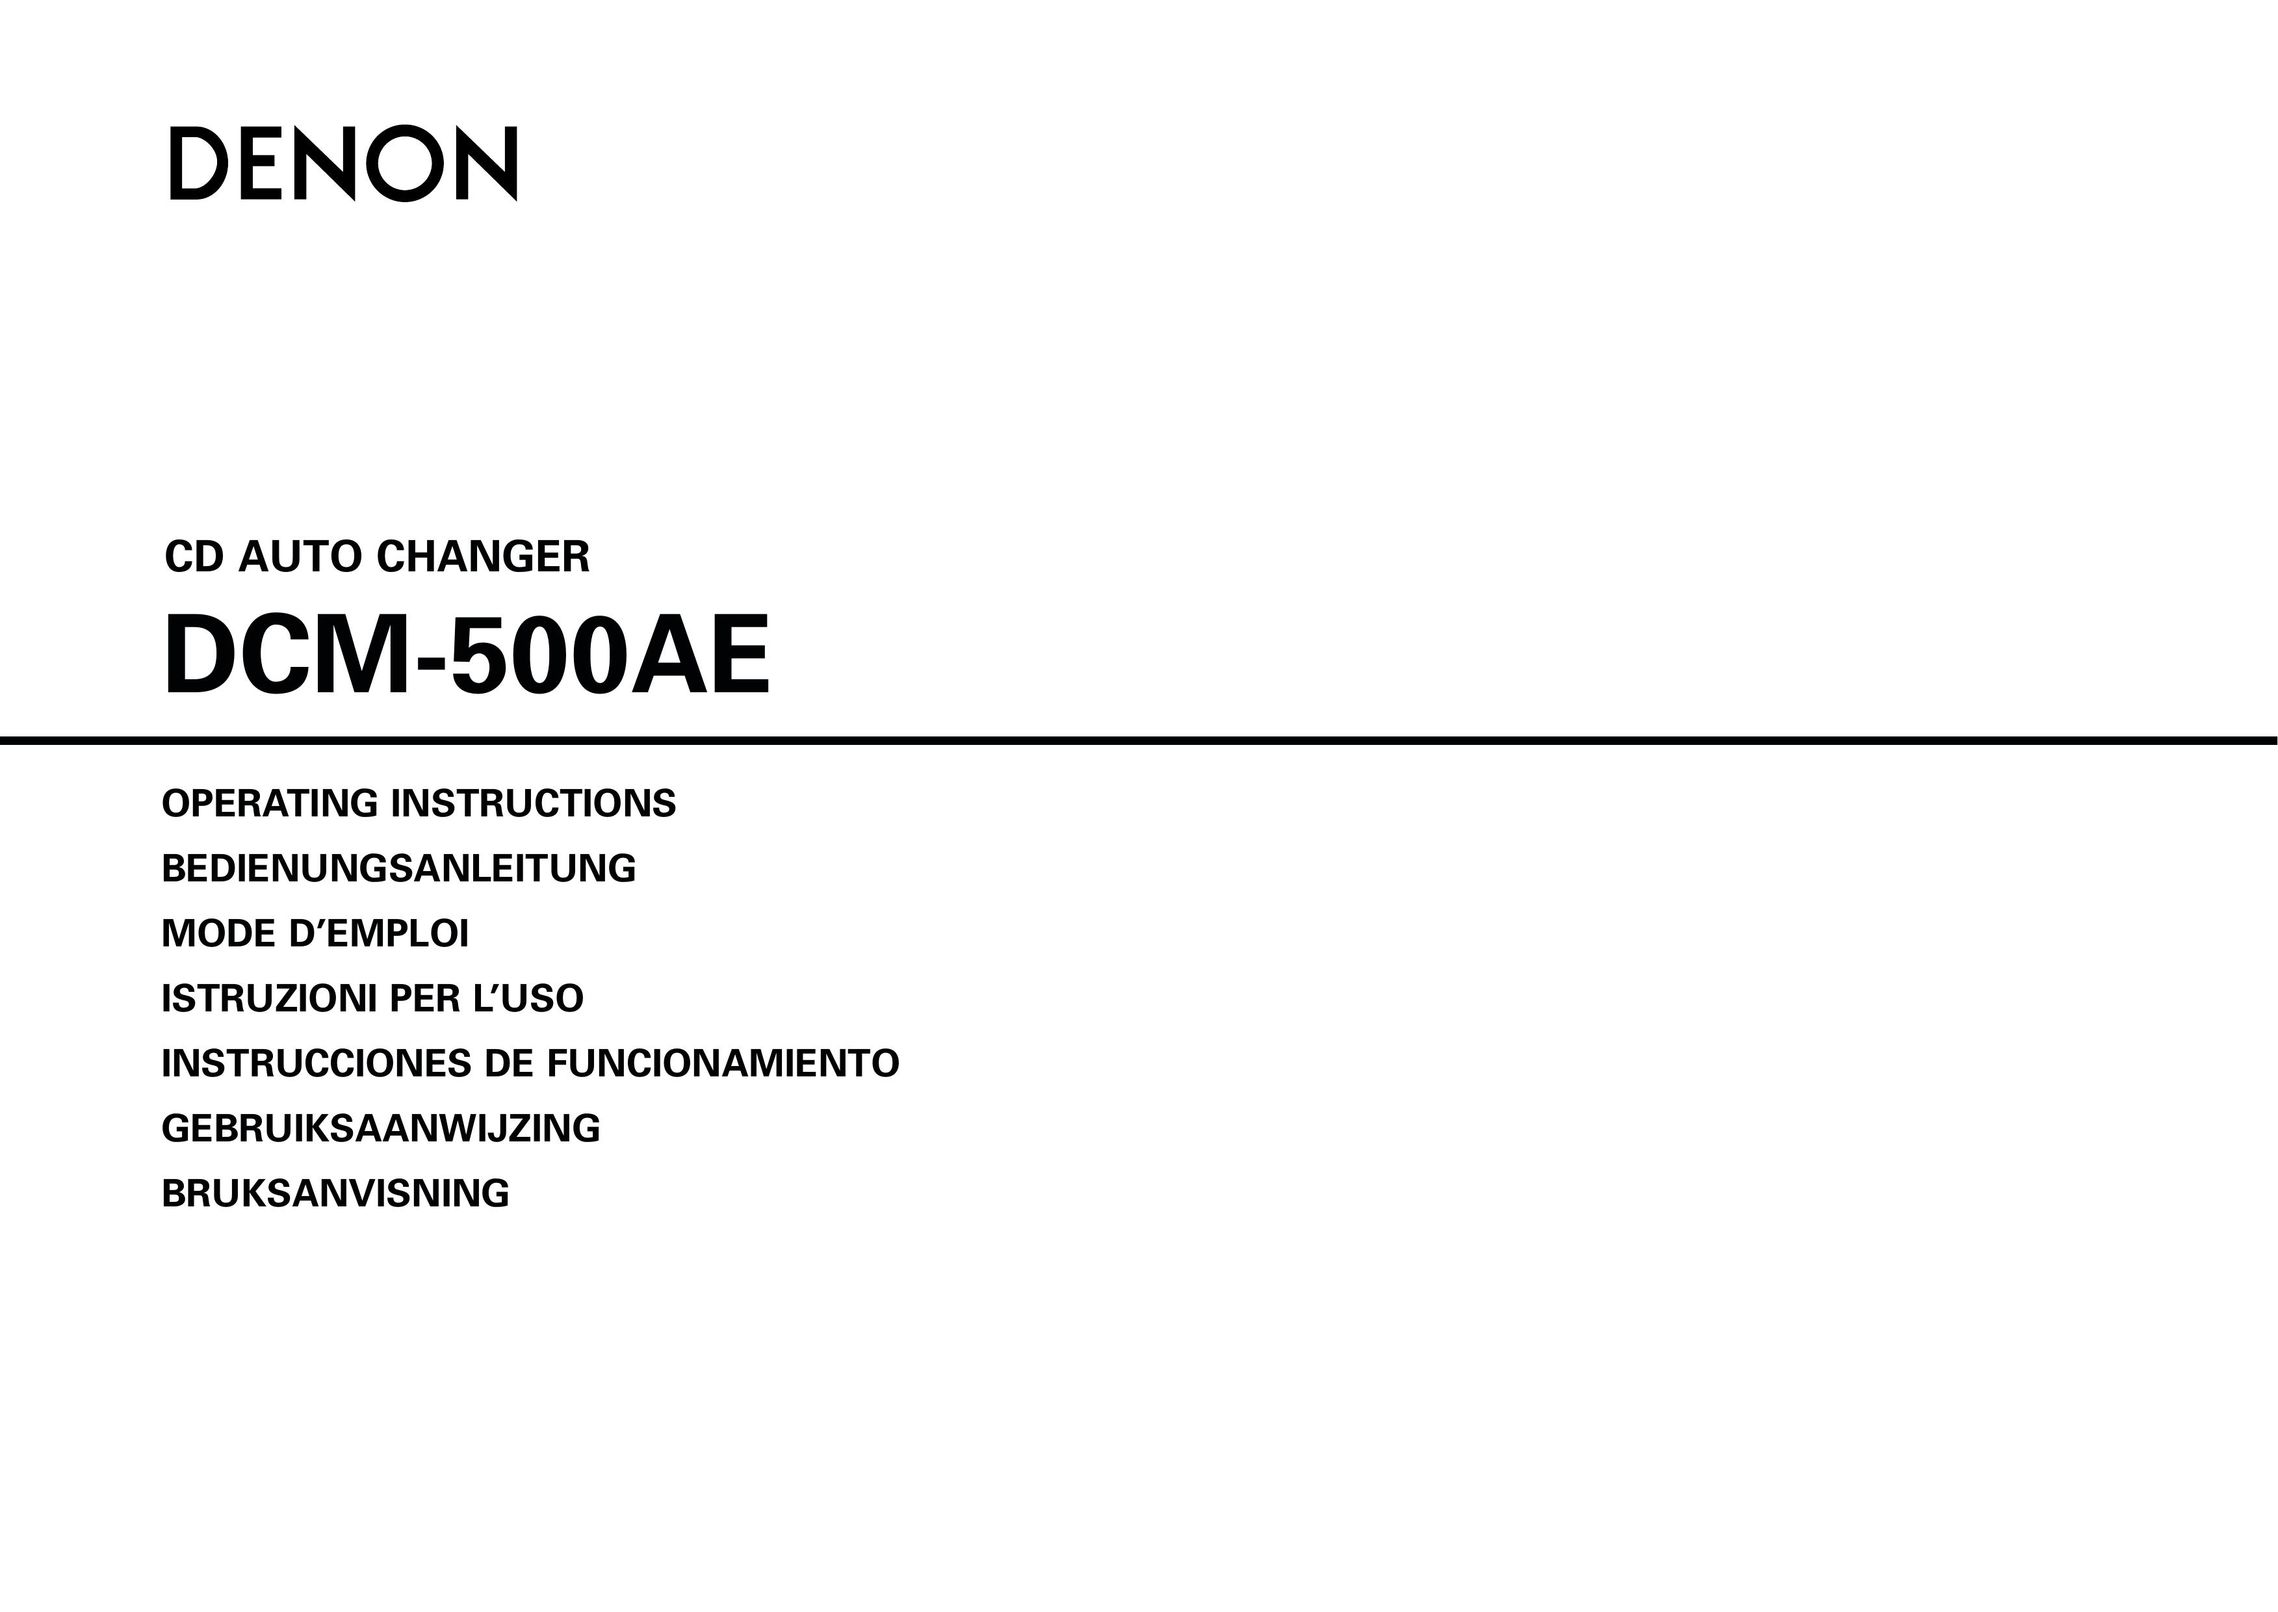 Denon DCM-500AE CD Player User Manual (Page 1)